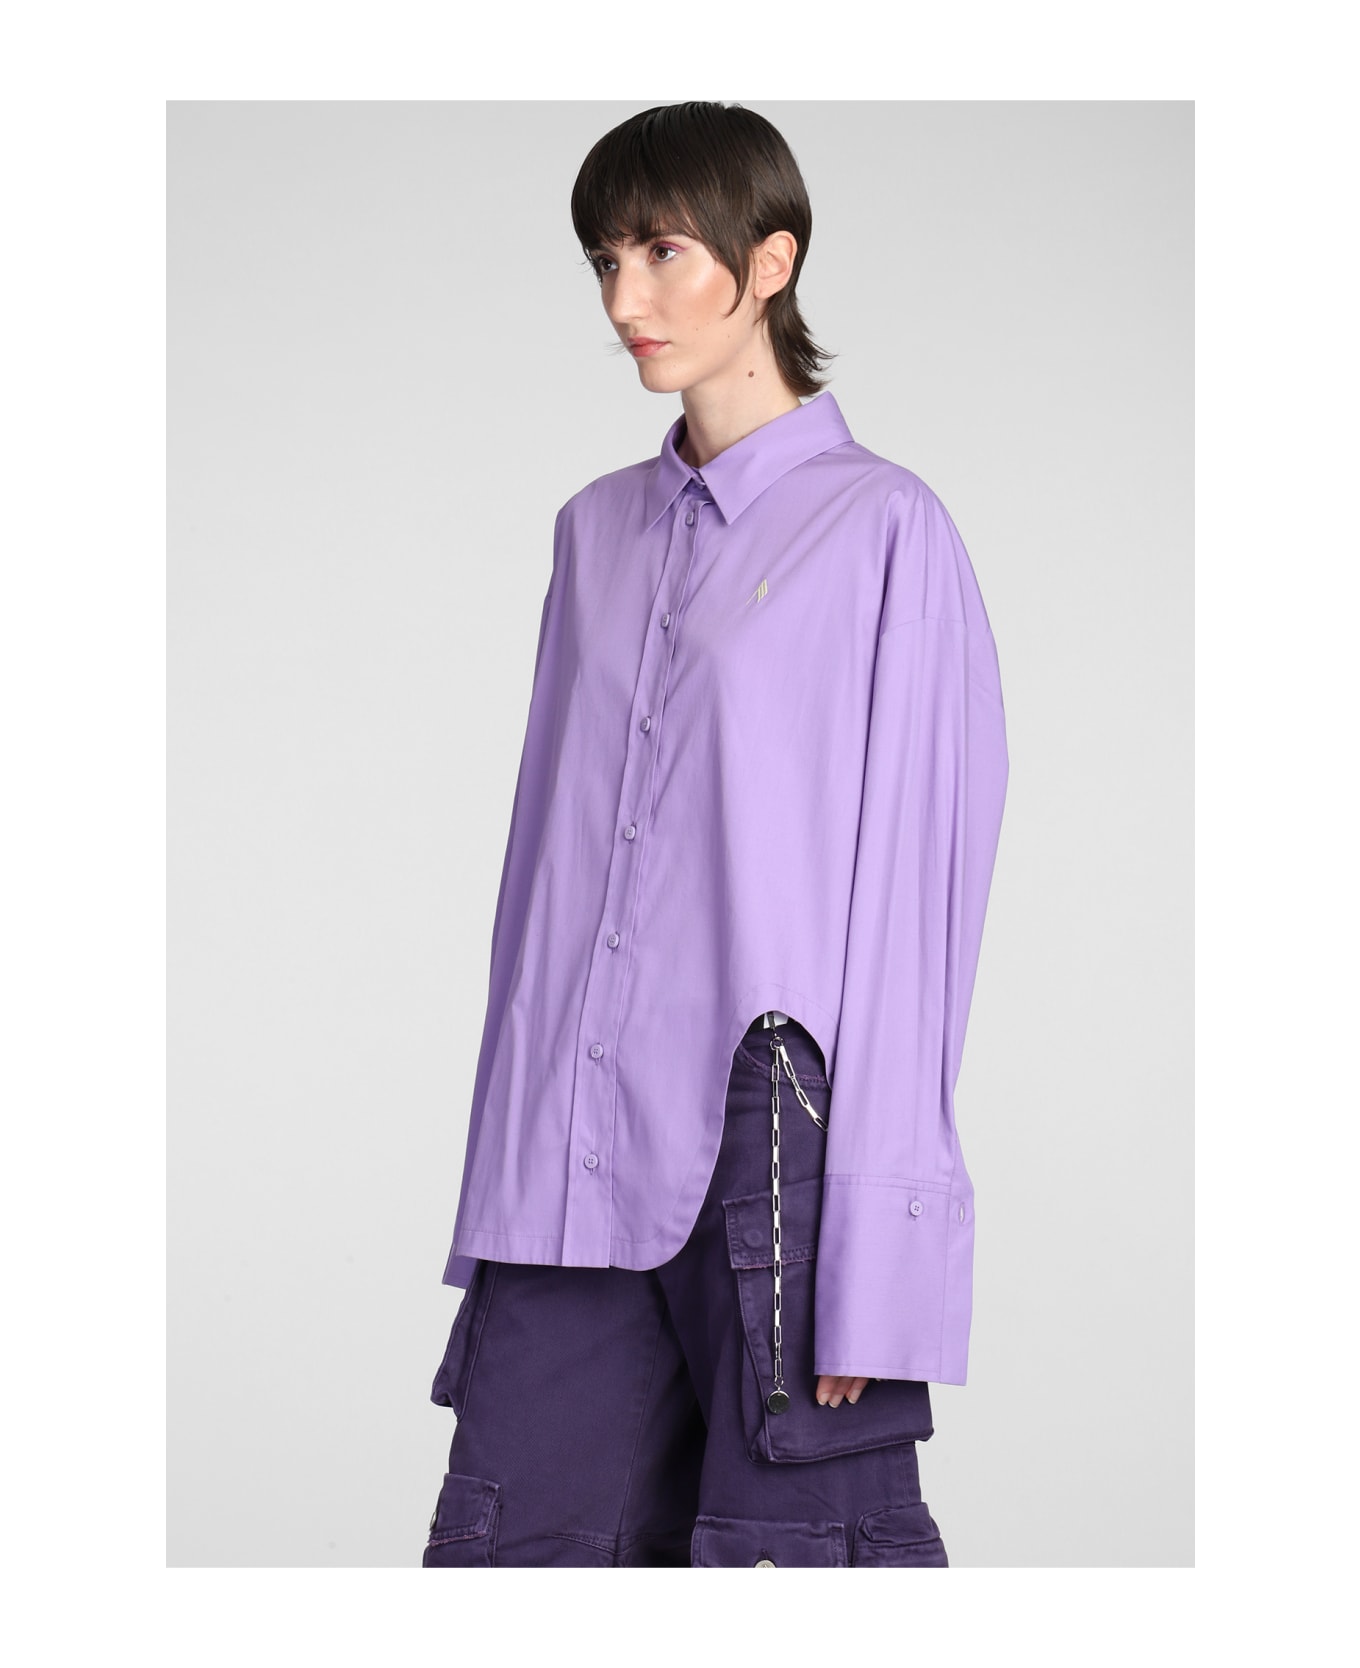 The Attico Diana Shirt In Viola Cotton - Viola